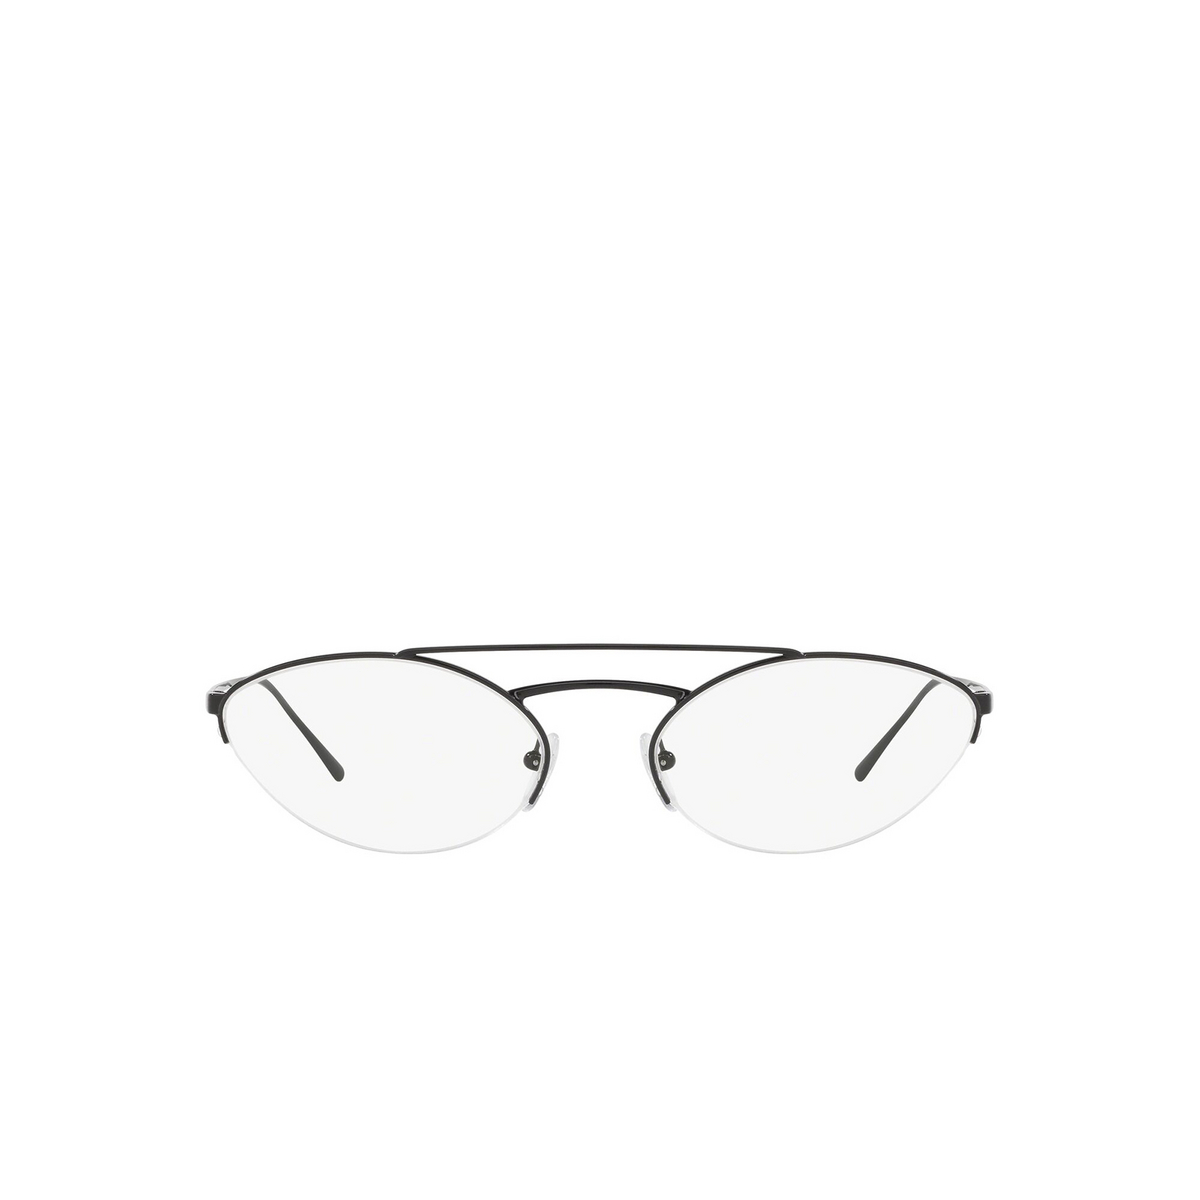 Prada® Oval Eyeglasses: Catwalk PR 62VV color Black 1AB1O1 - 1/3.